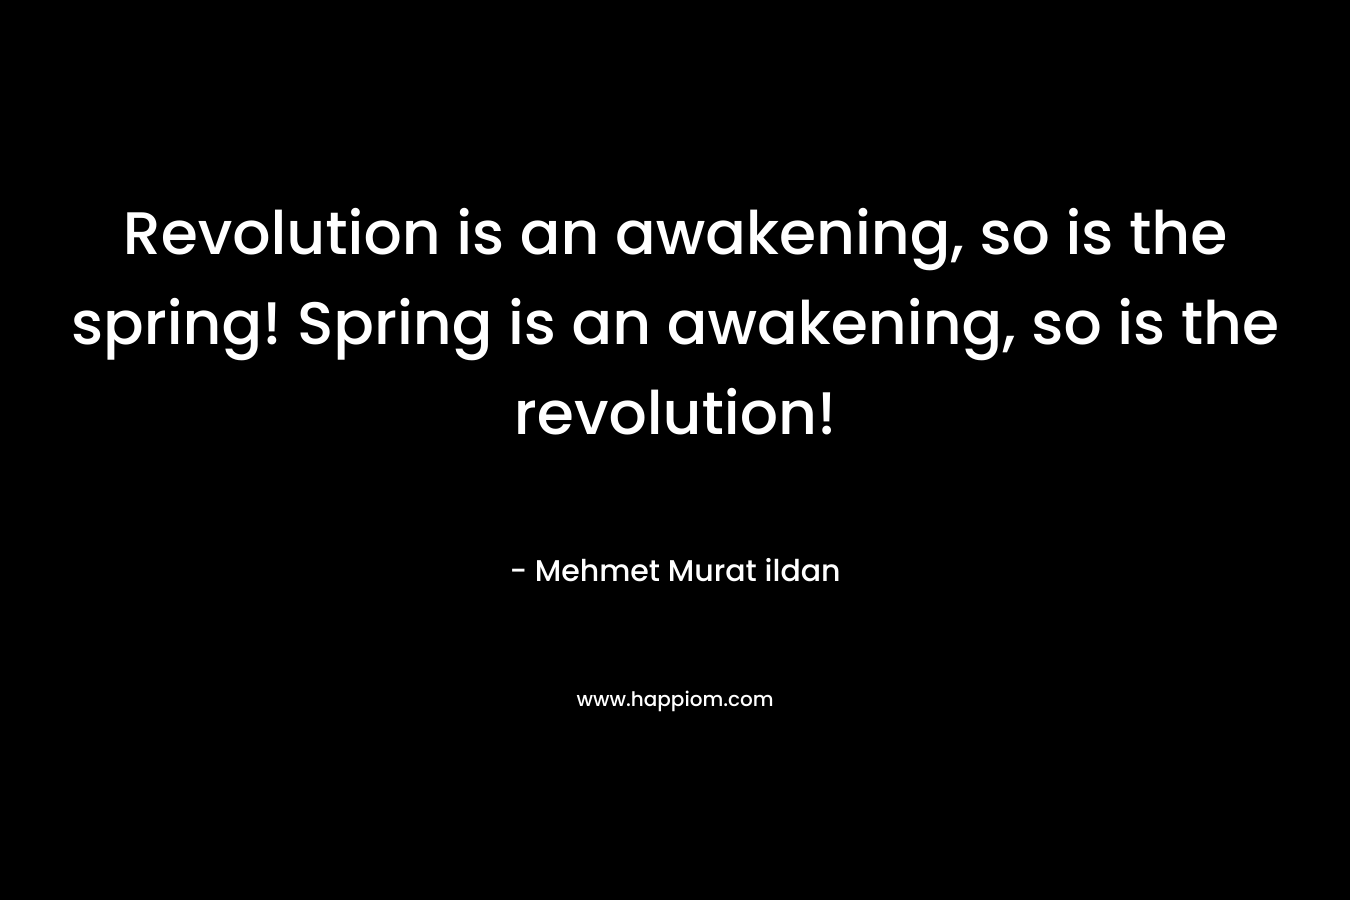 Revolution is an awakening, so is the spring! Spring is an awakening, so is the revolution! – Mehmet Murat ildan